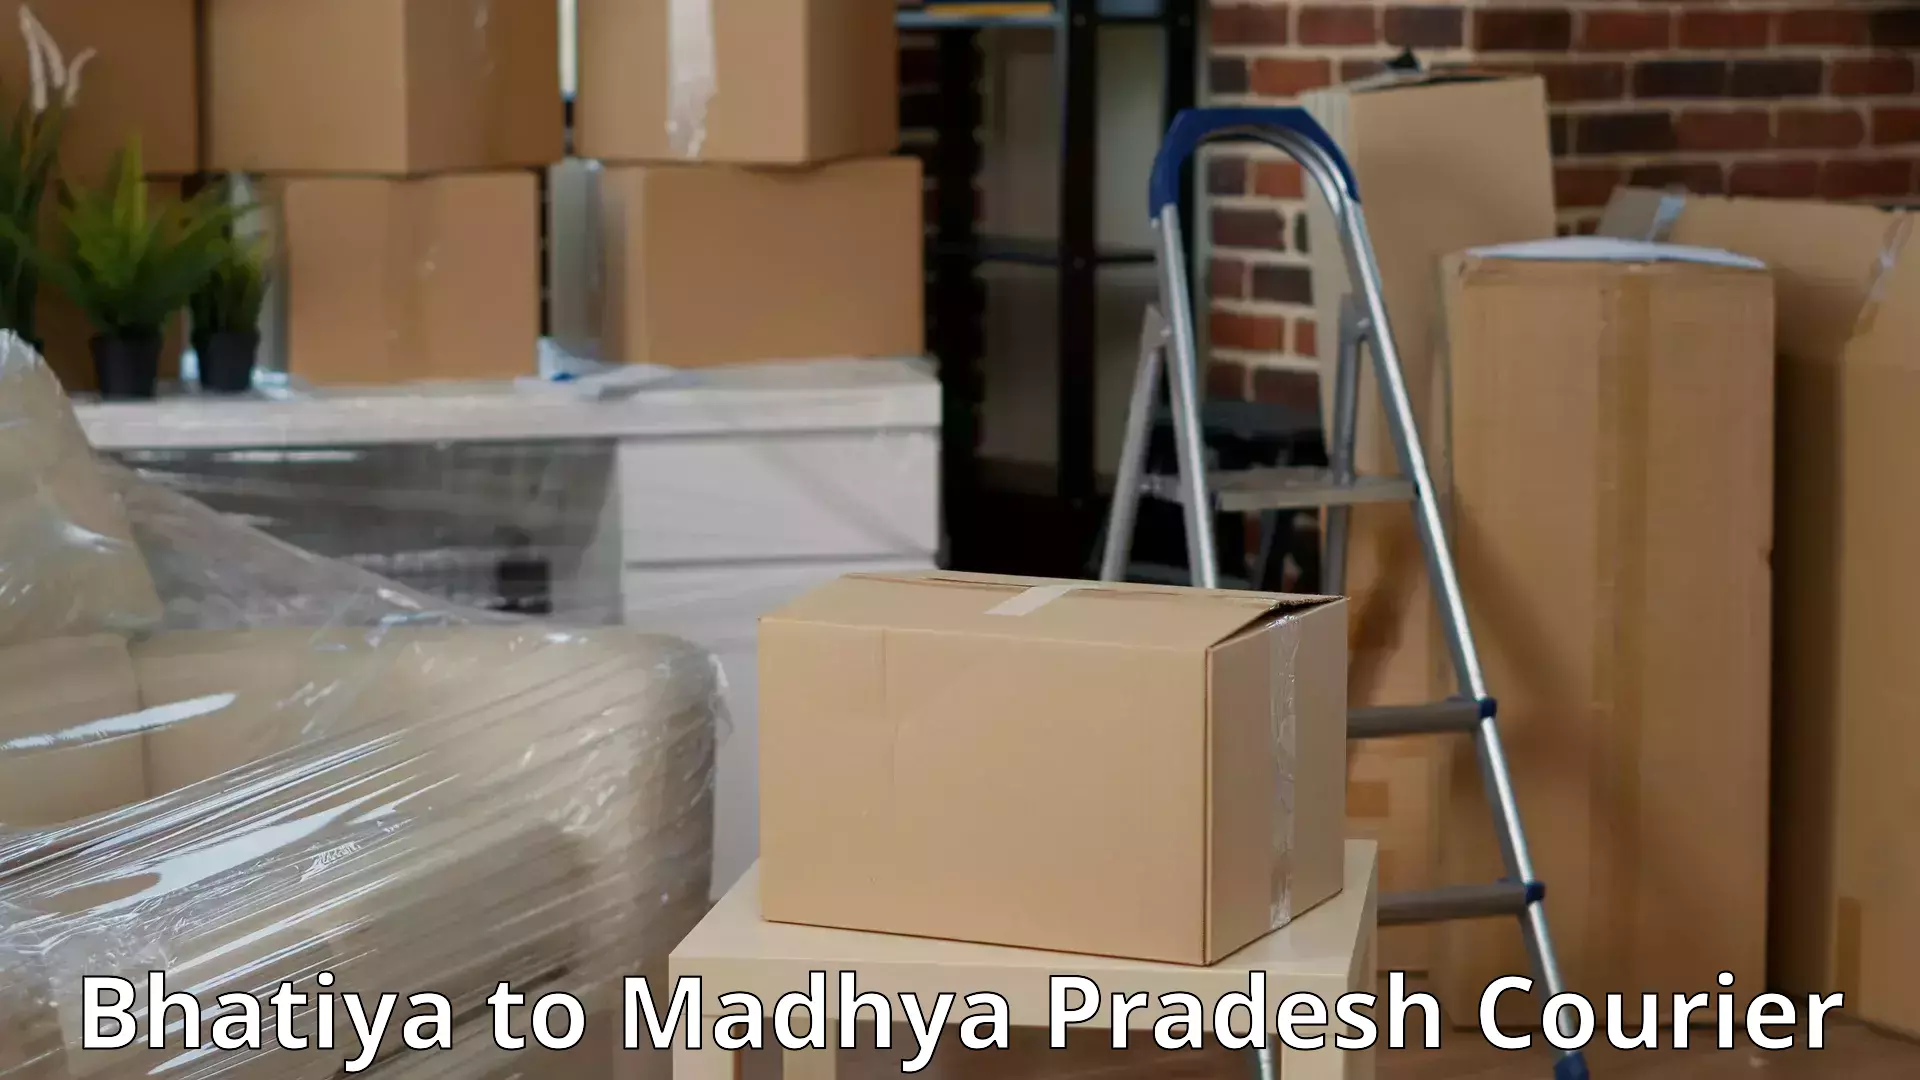 Professional home movers in Bhatiya to Madhya Pradesh